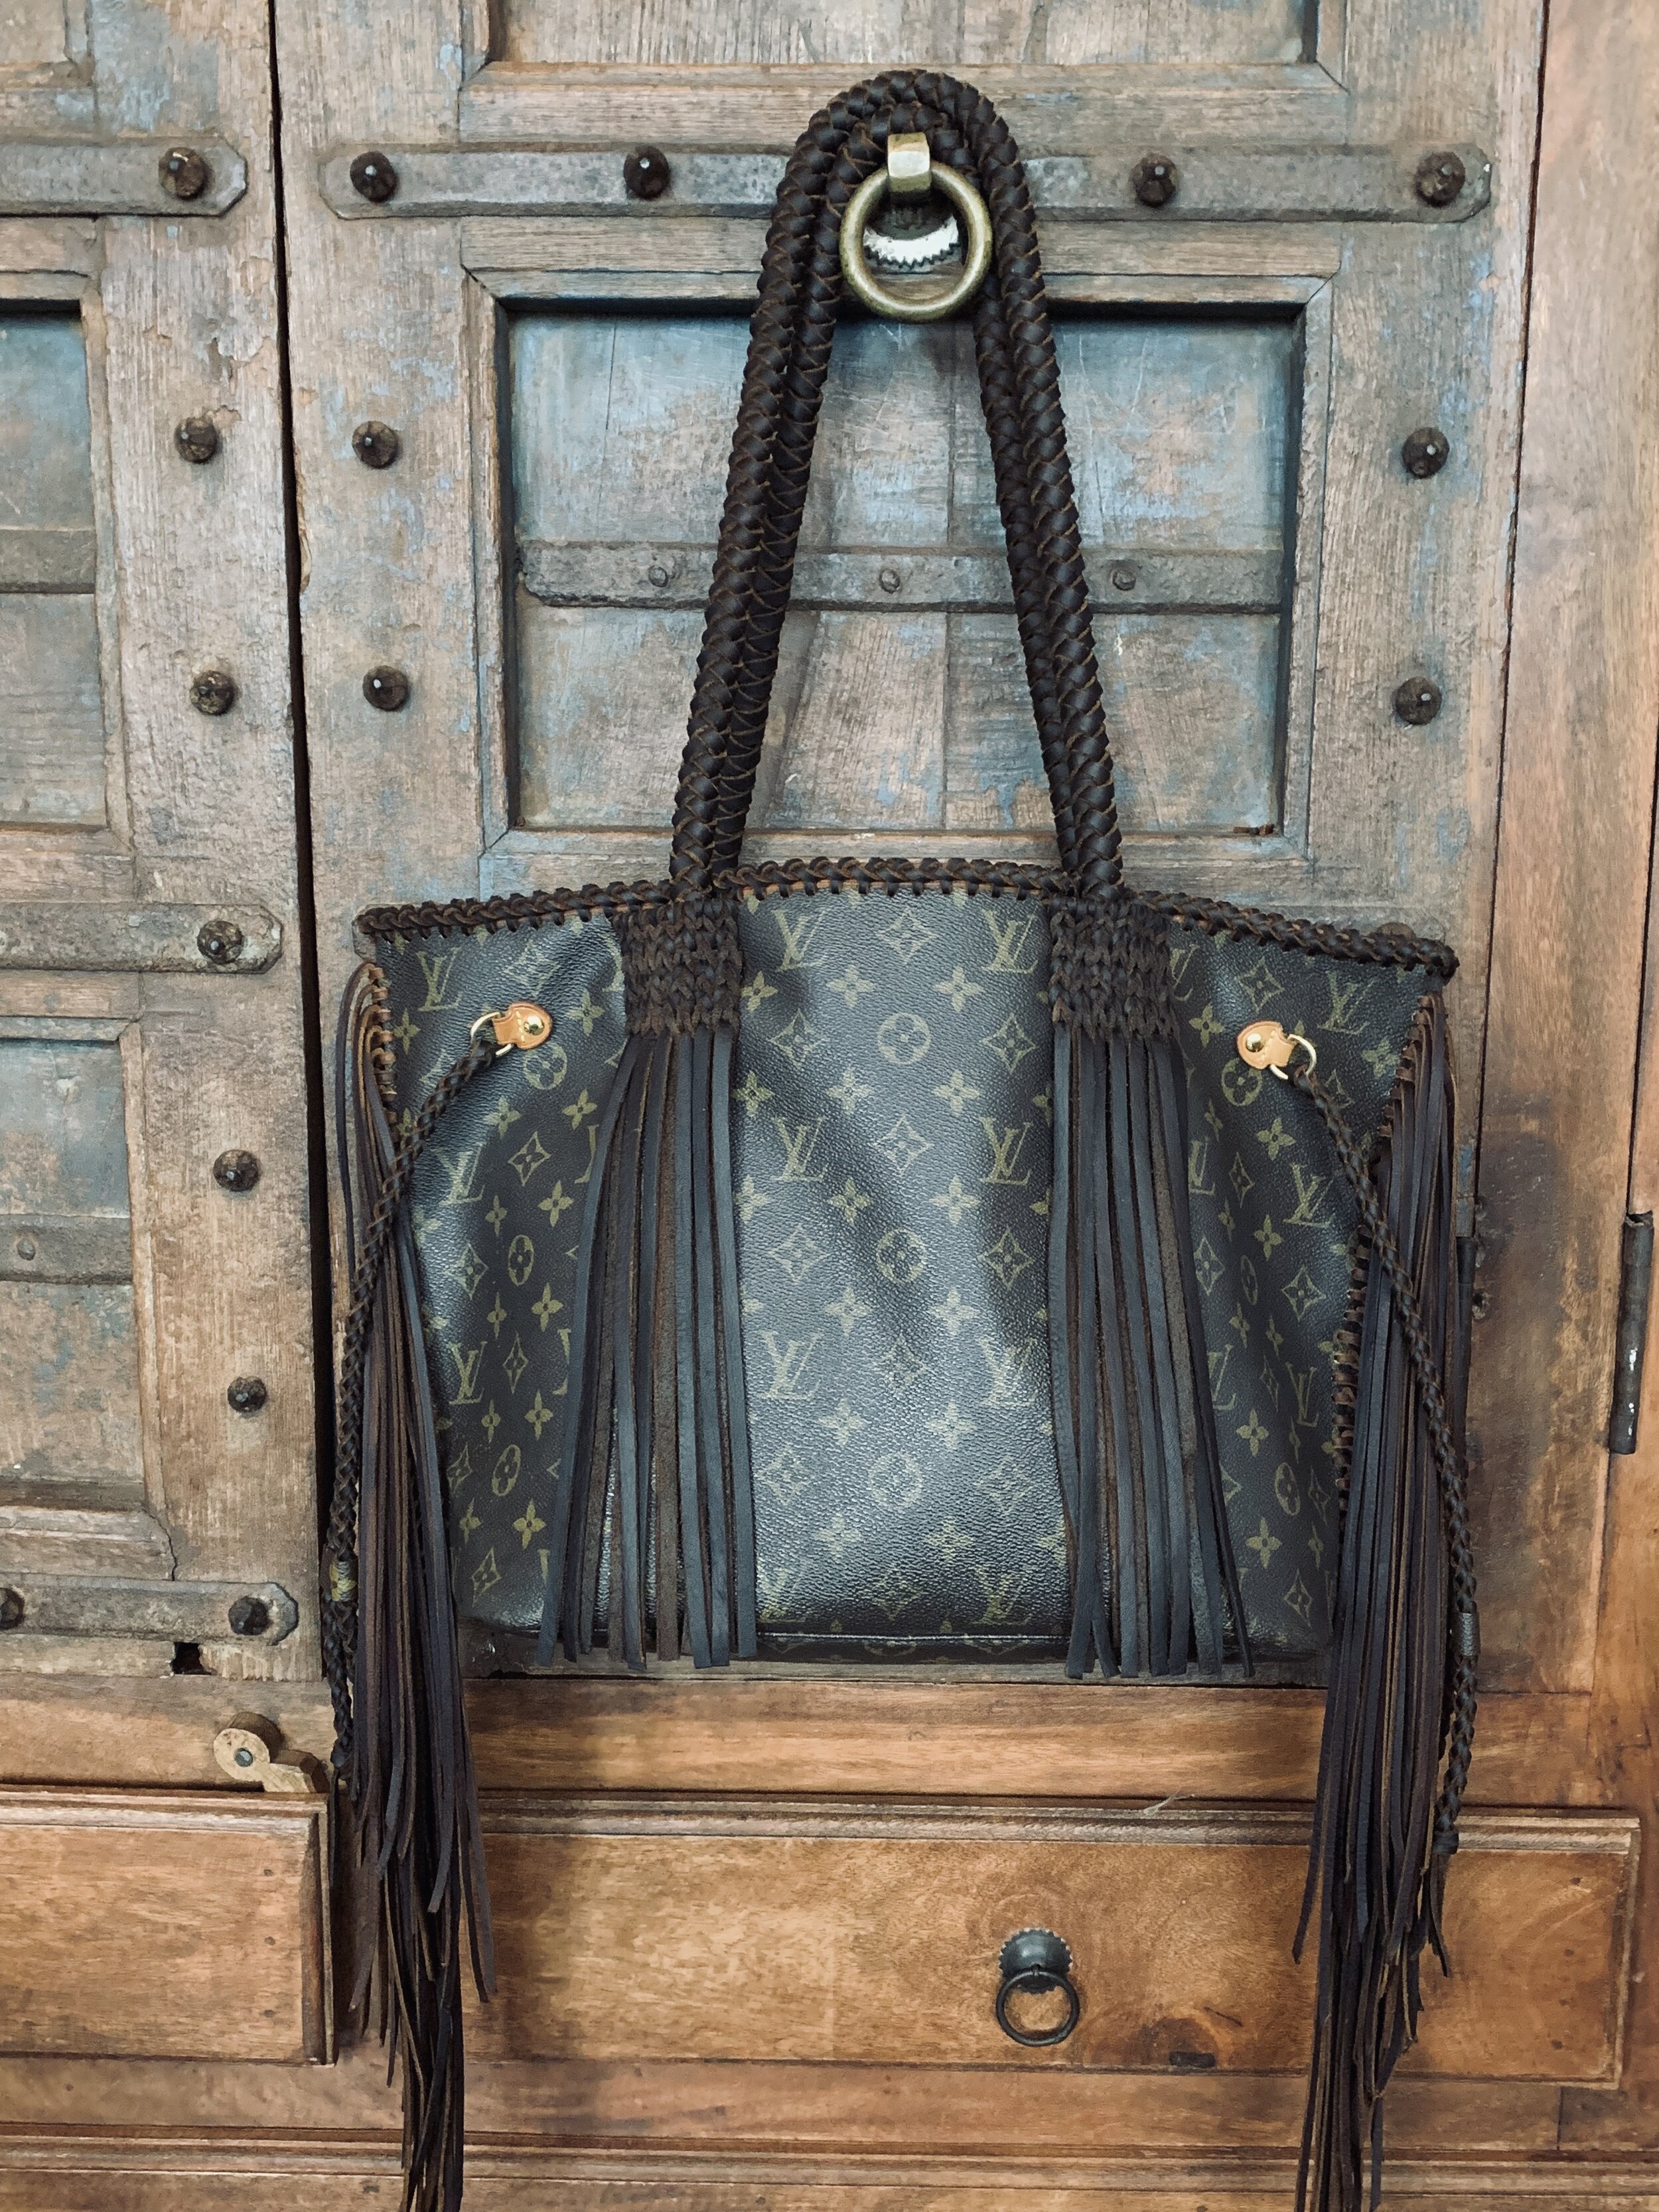 Globe Trotter Tote - with Chocolate Boho Fringe, Braided Handle – Vintage  Boho Bags